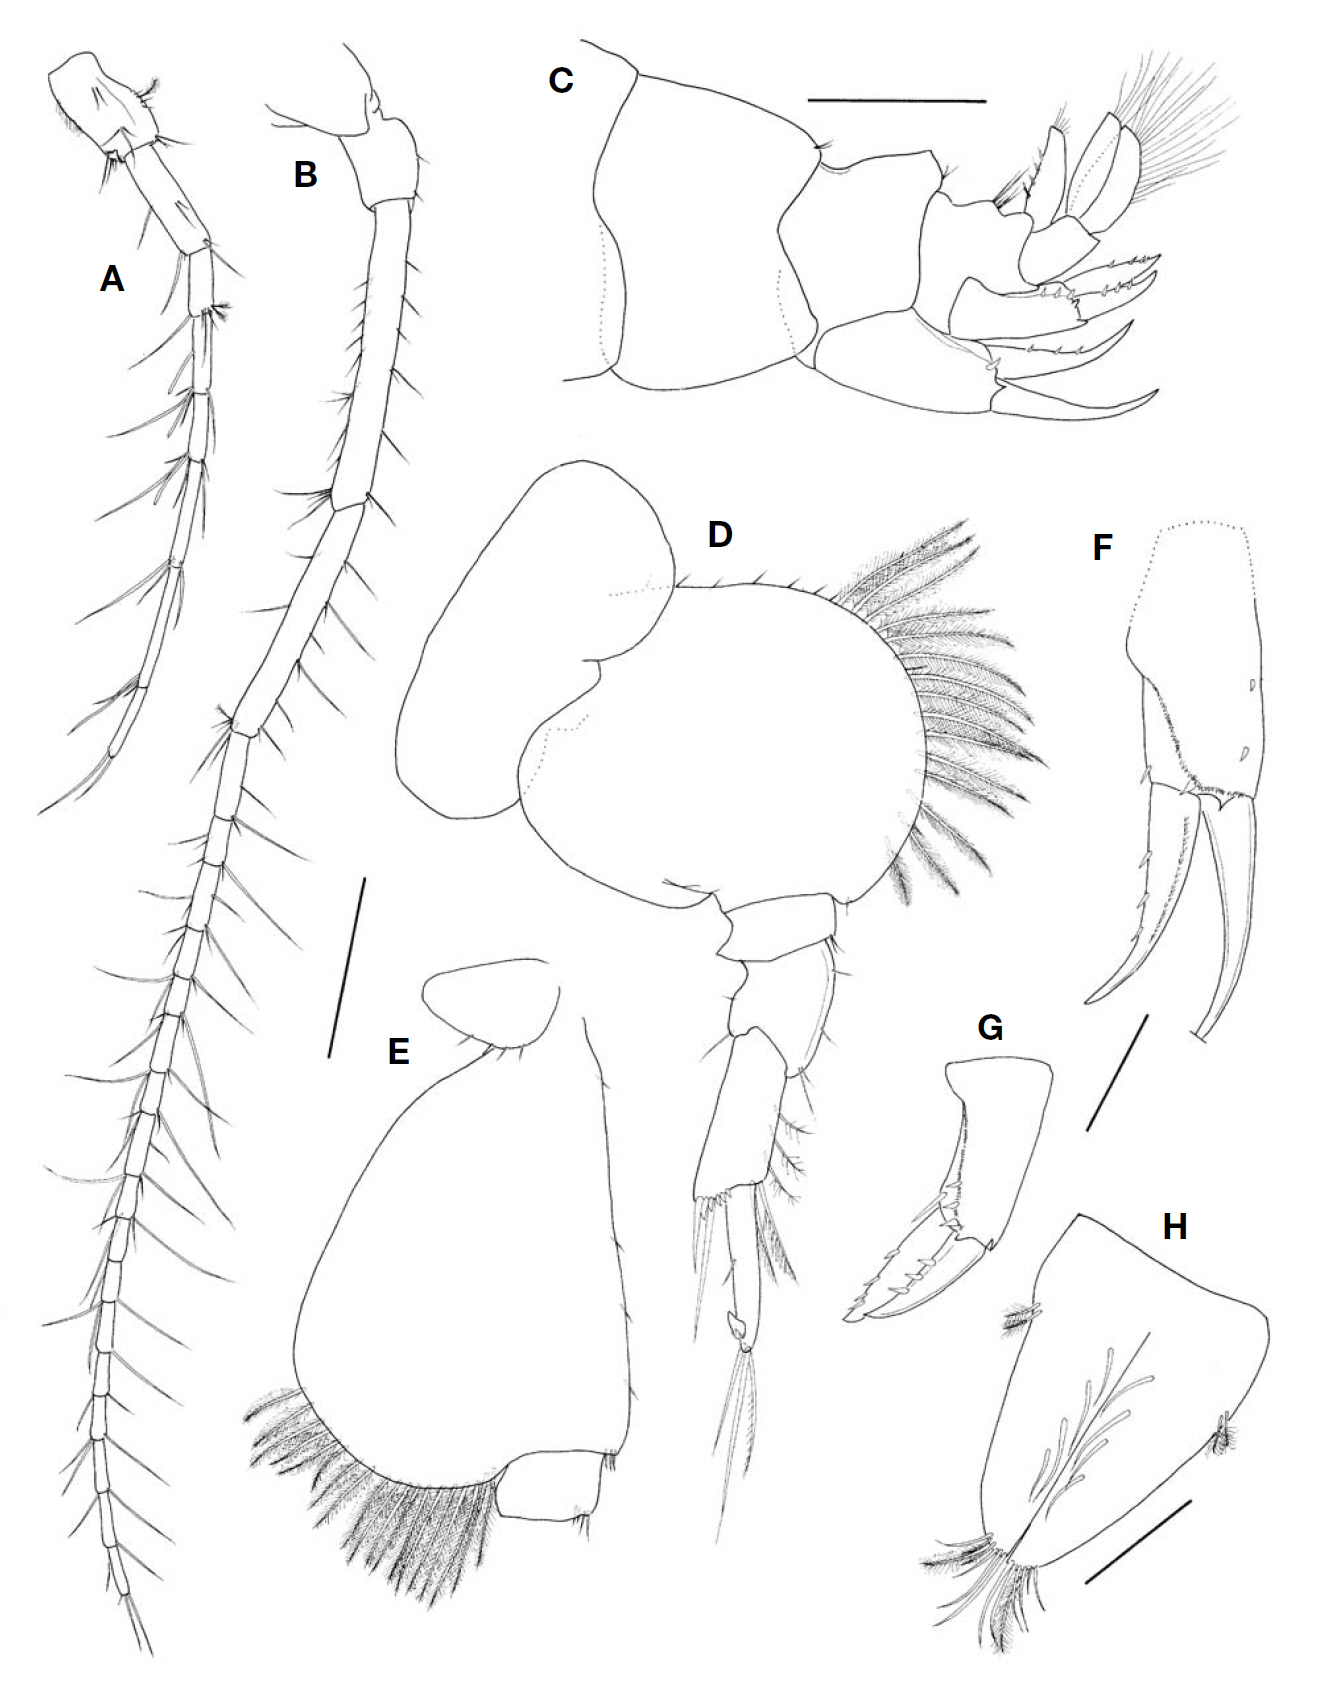 Ampelisca alatopedunculata Ren female 5.5 mm. A Antenna 1; B Antenna 2; C Pleonites and urosomites; D Pereopod 5; E Pereopod 7; F Uropod 1; G Uropod 2; H Telson. Scale bars: A B D E=0.4 mm C=0.5 mm F G=0.2 mm H=0.1 mm.